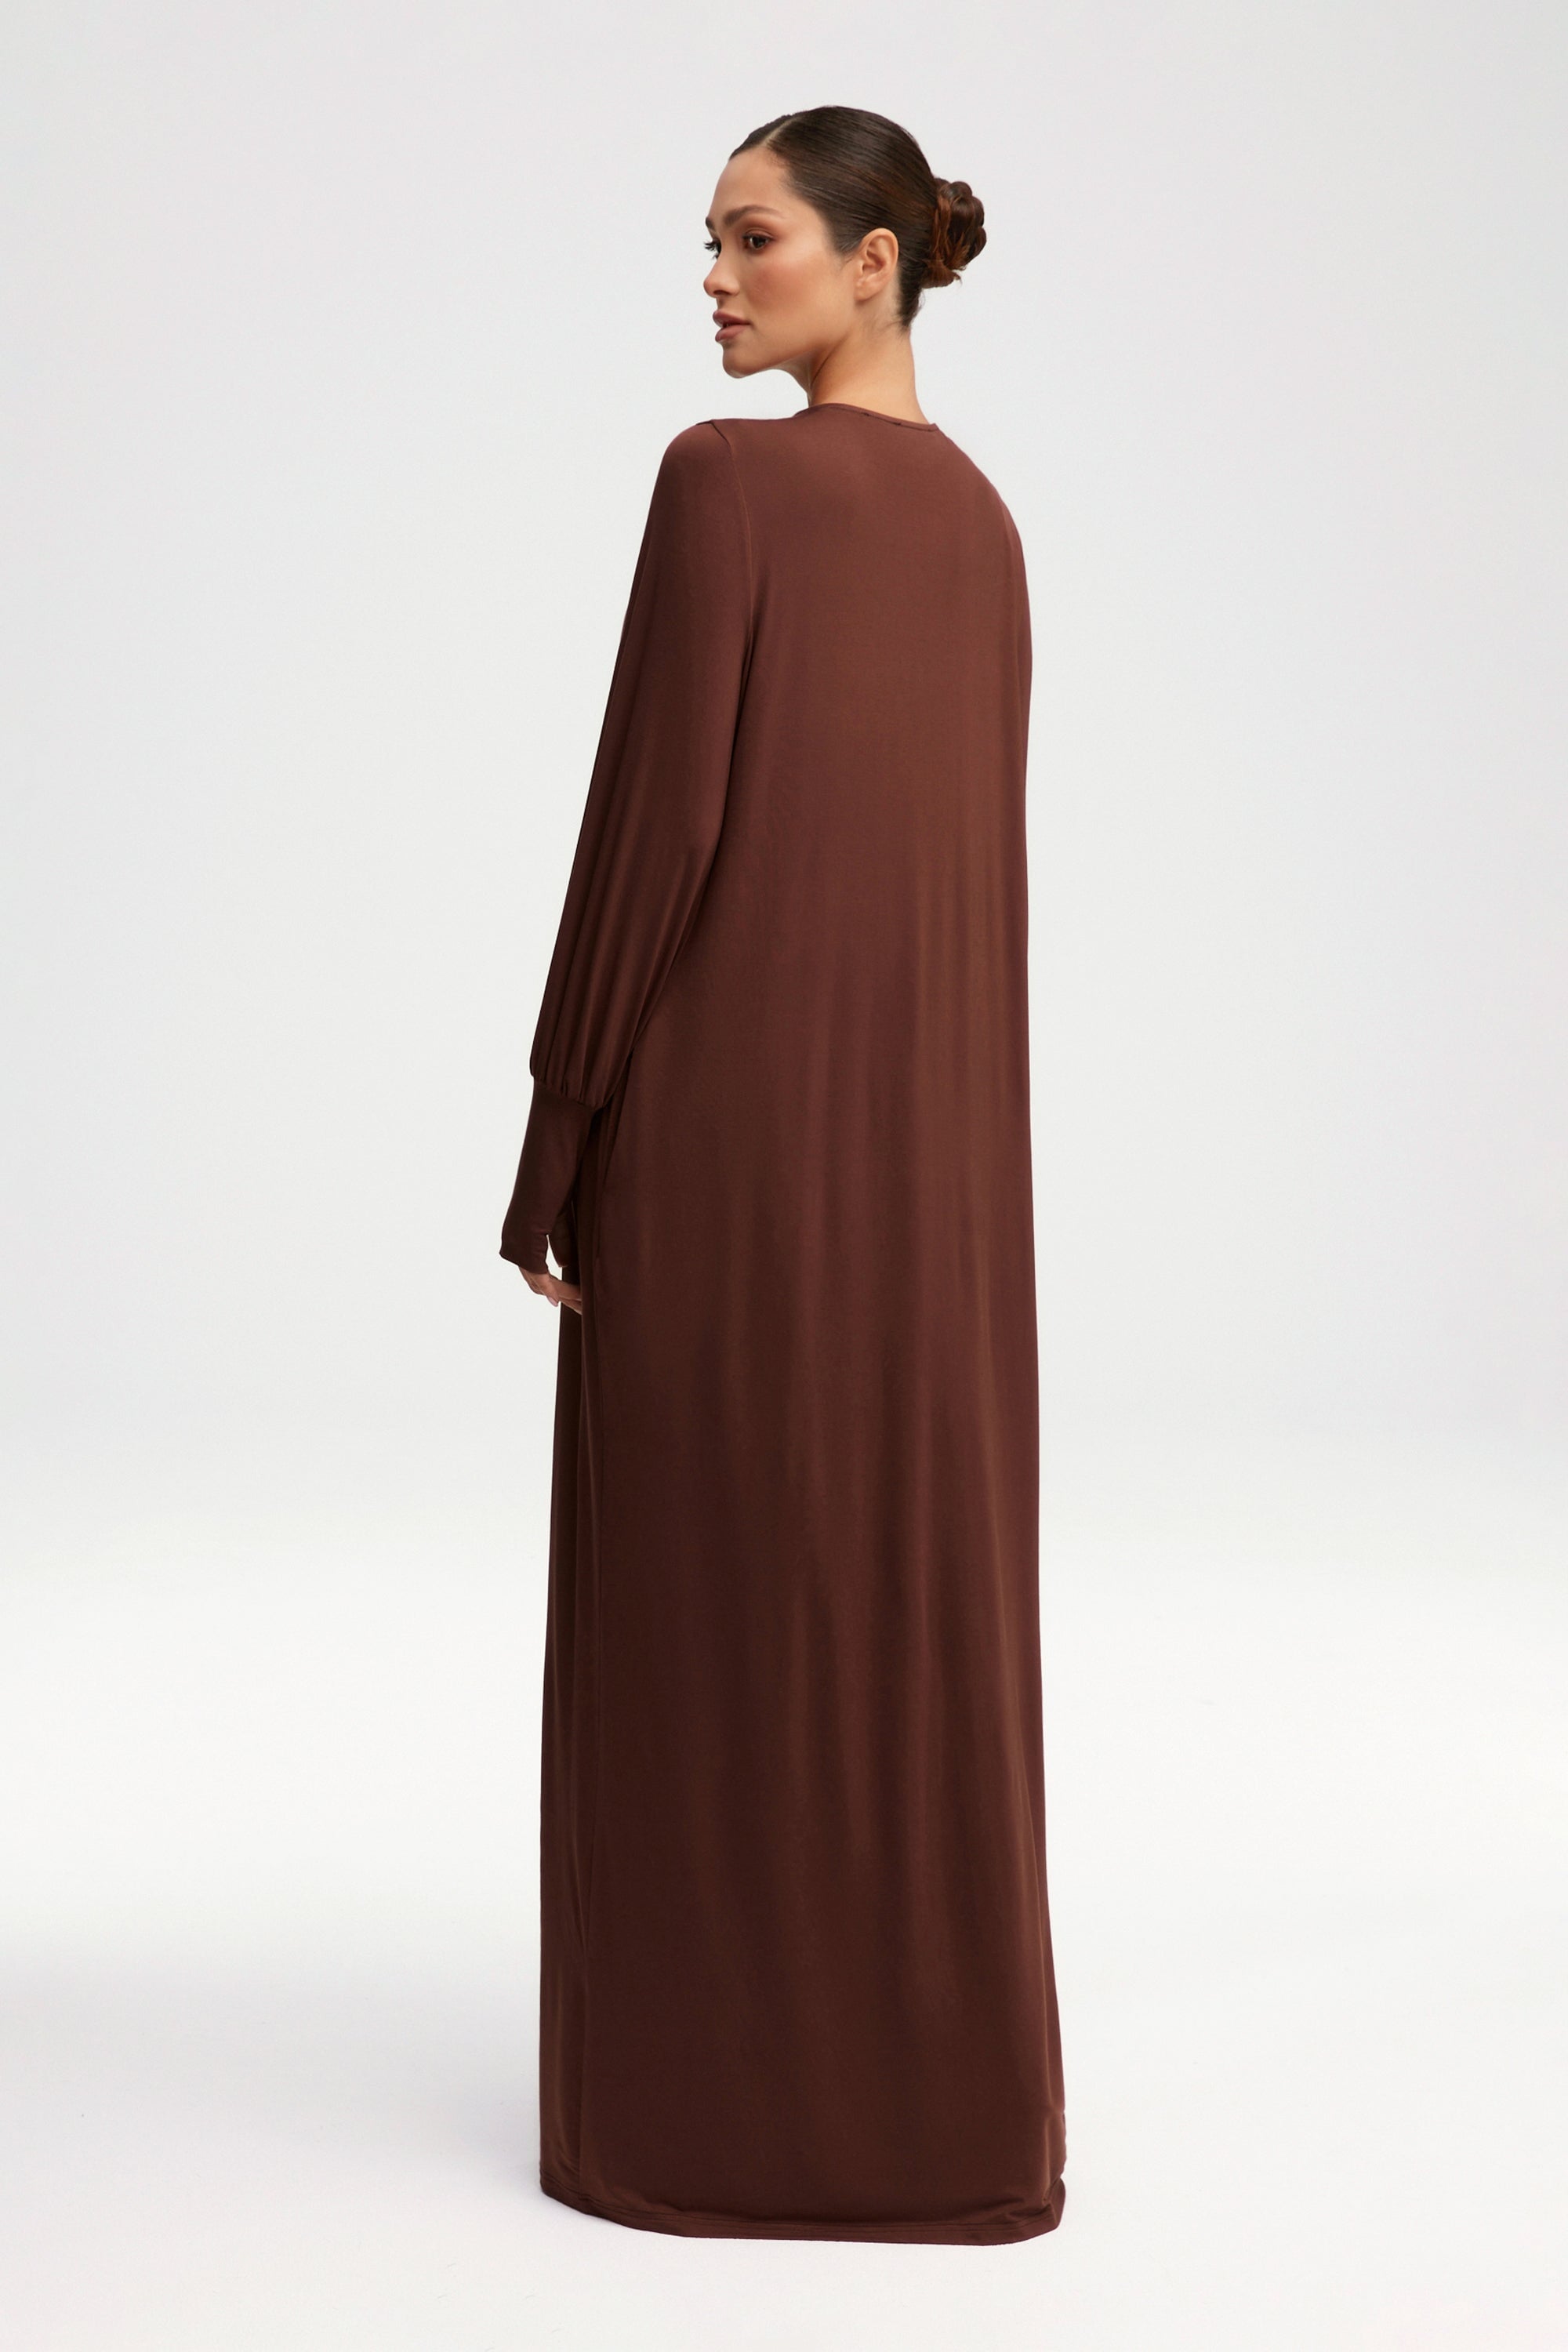 Jenin Jersey Open Abaya - Chocolate Clothing Veiled 